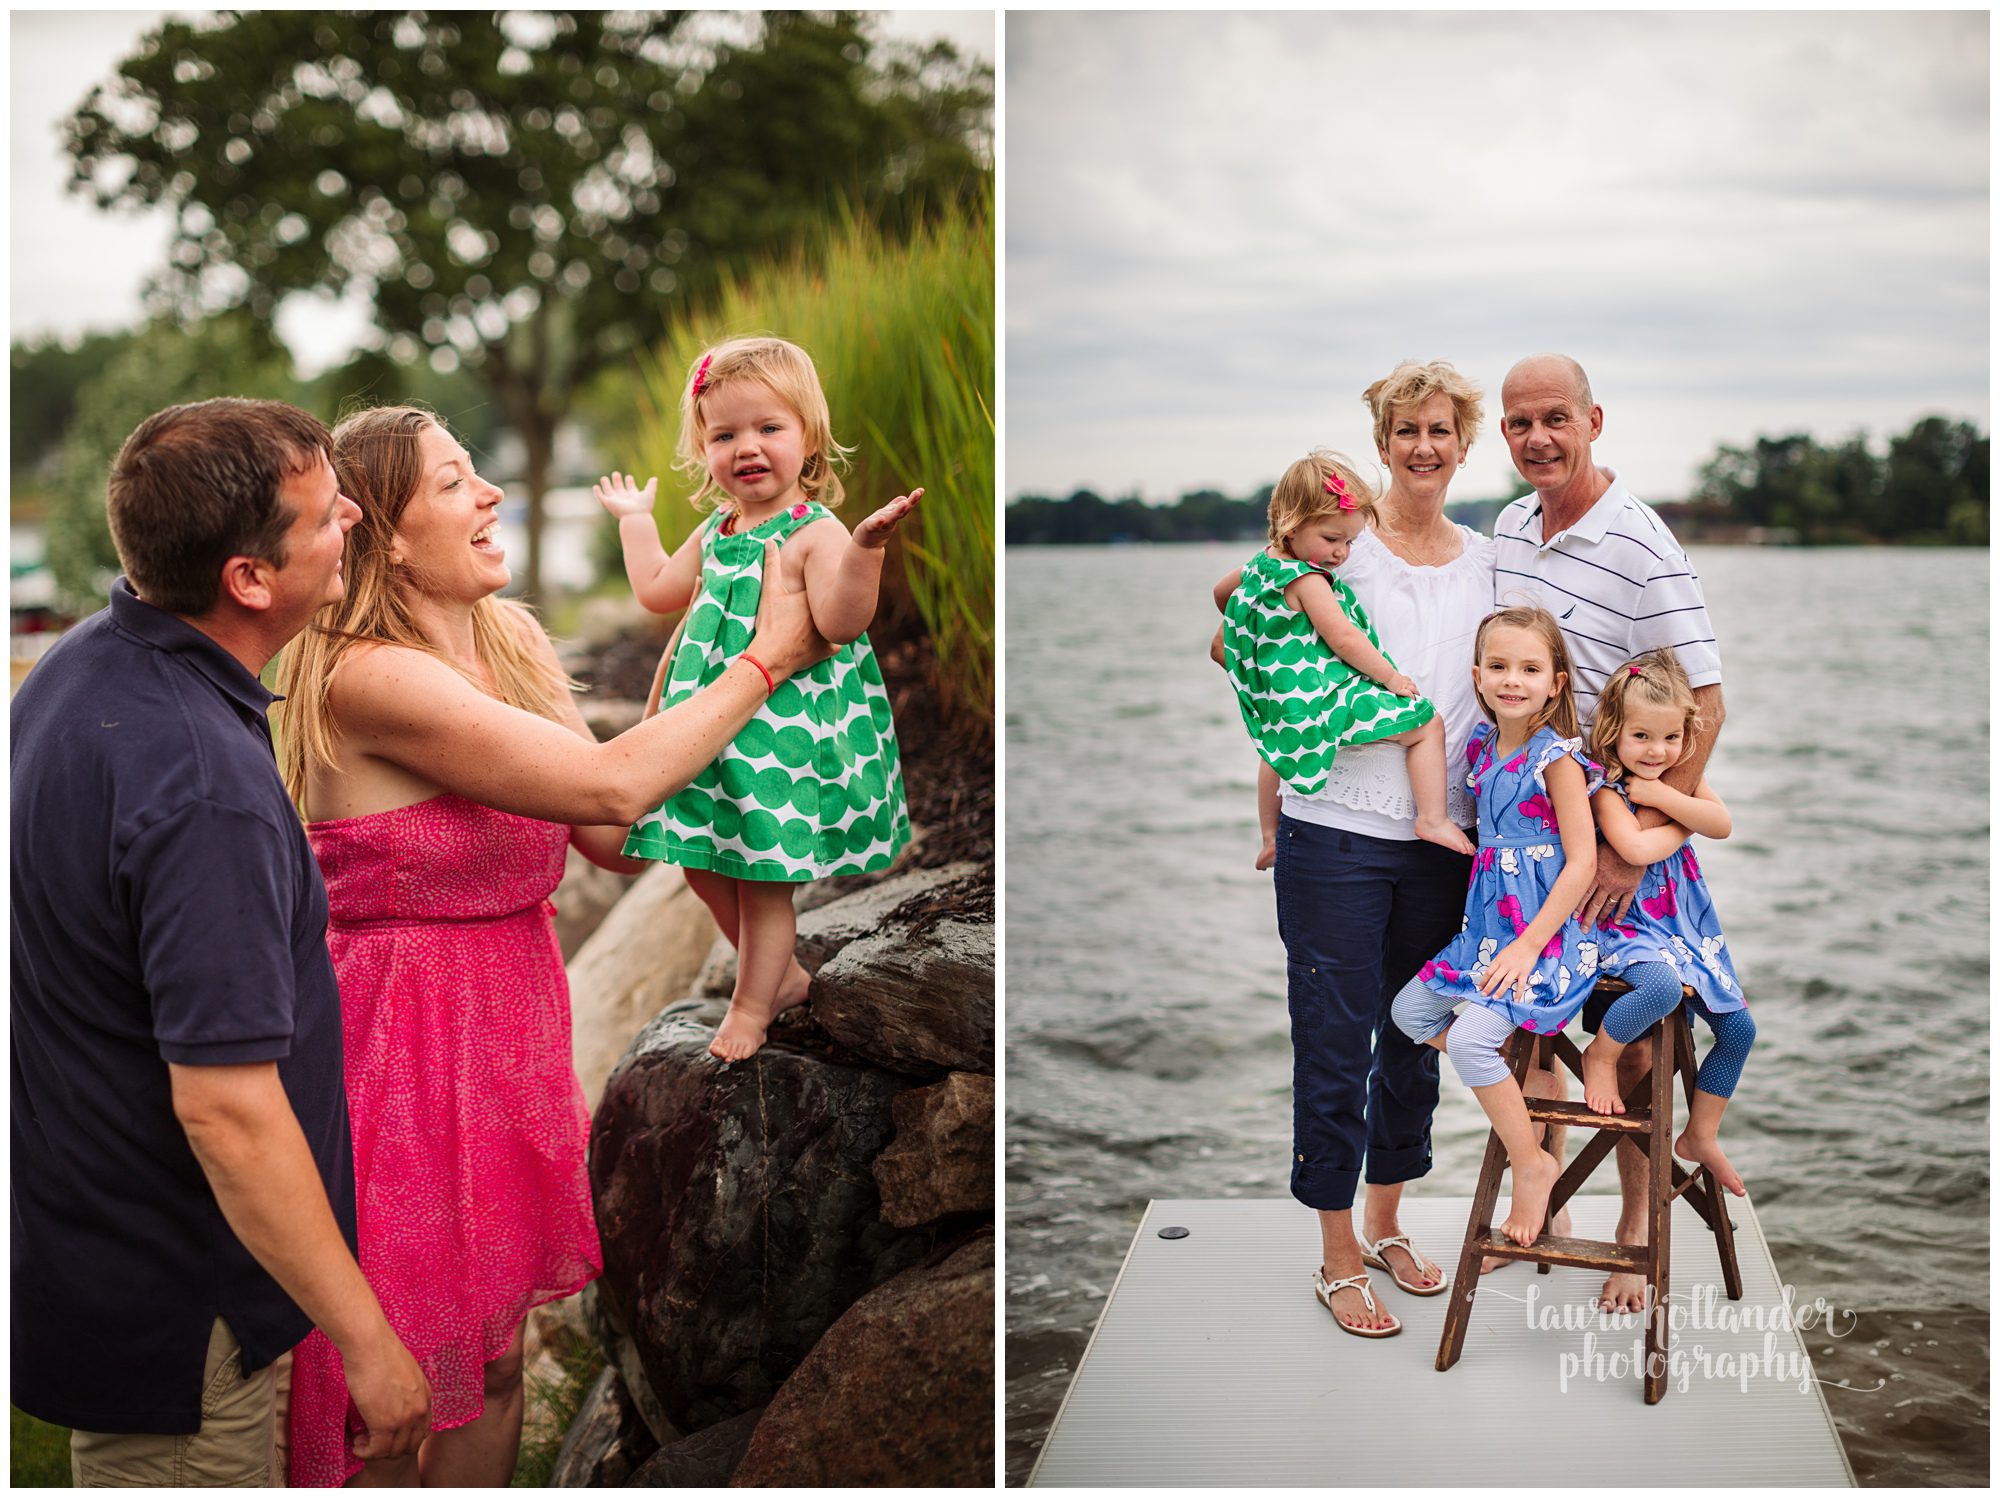 family portraits, grandparent portraits, lake portraits on the dock, granddaughters 